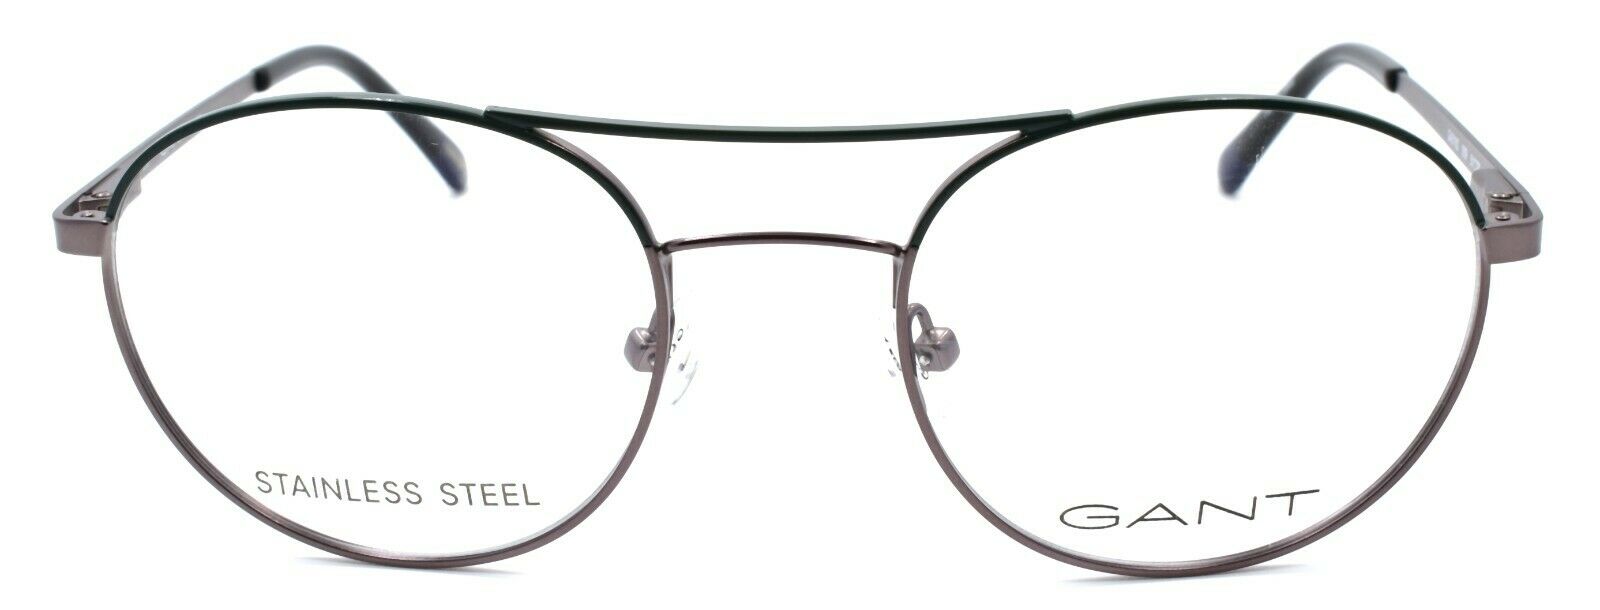 2-GANT GA3182 009 Men's Eyeglasses Frames 51-20-145 Matte Gunmetal-889214020499-IKSpecs